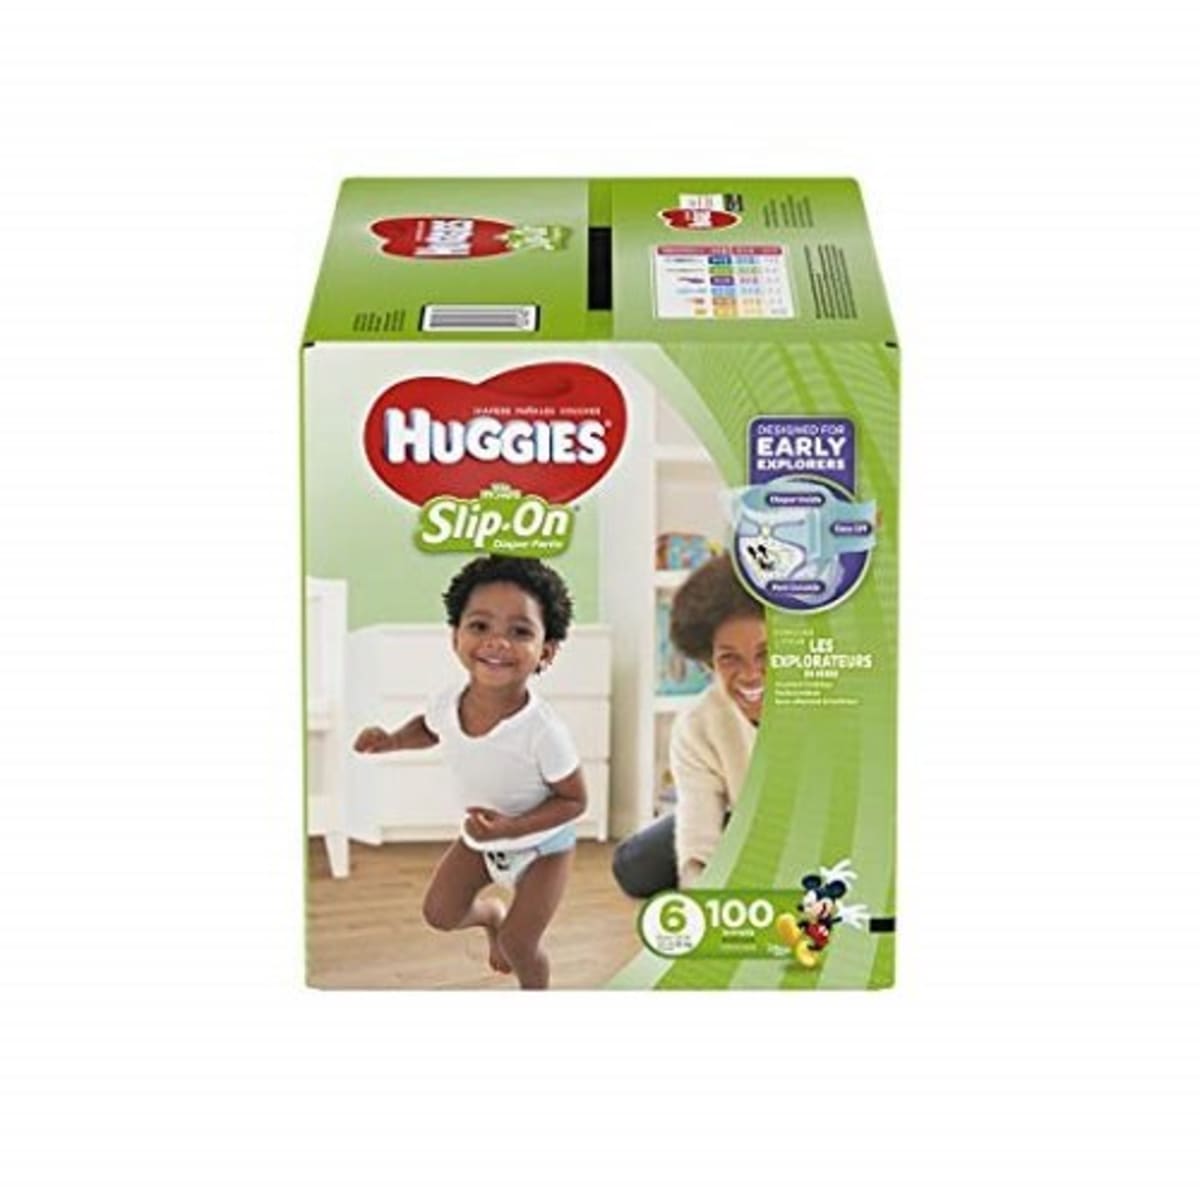  Huggies Little Movers Slip-On Diaper Pants, Size 6